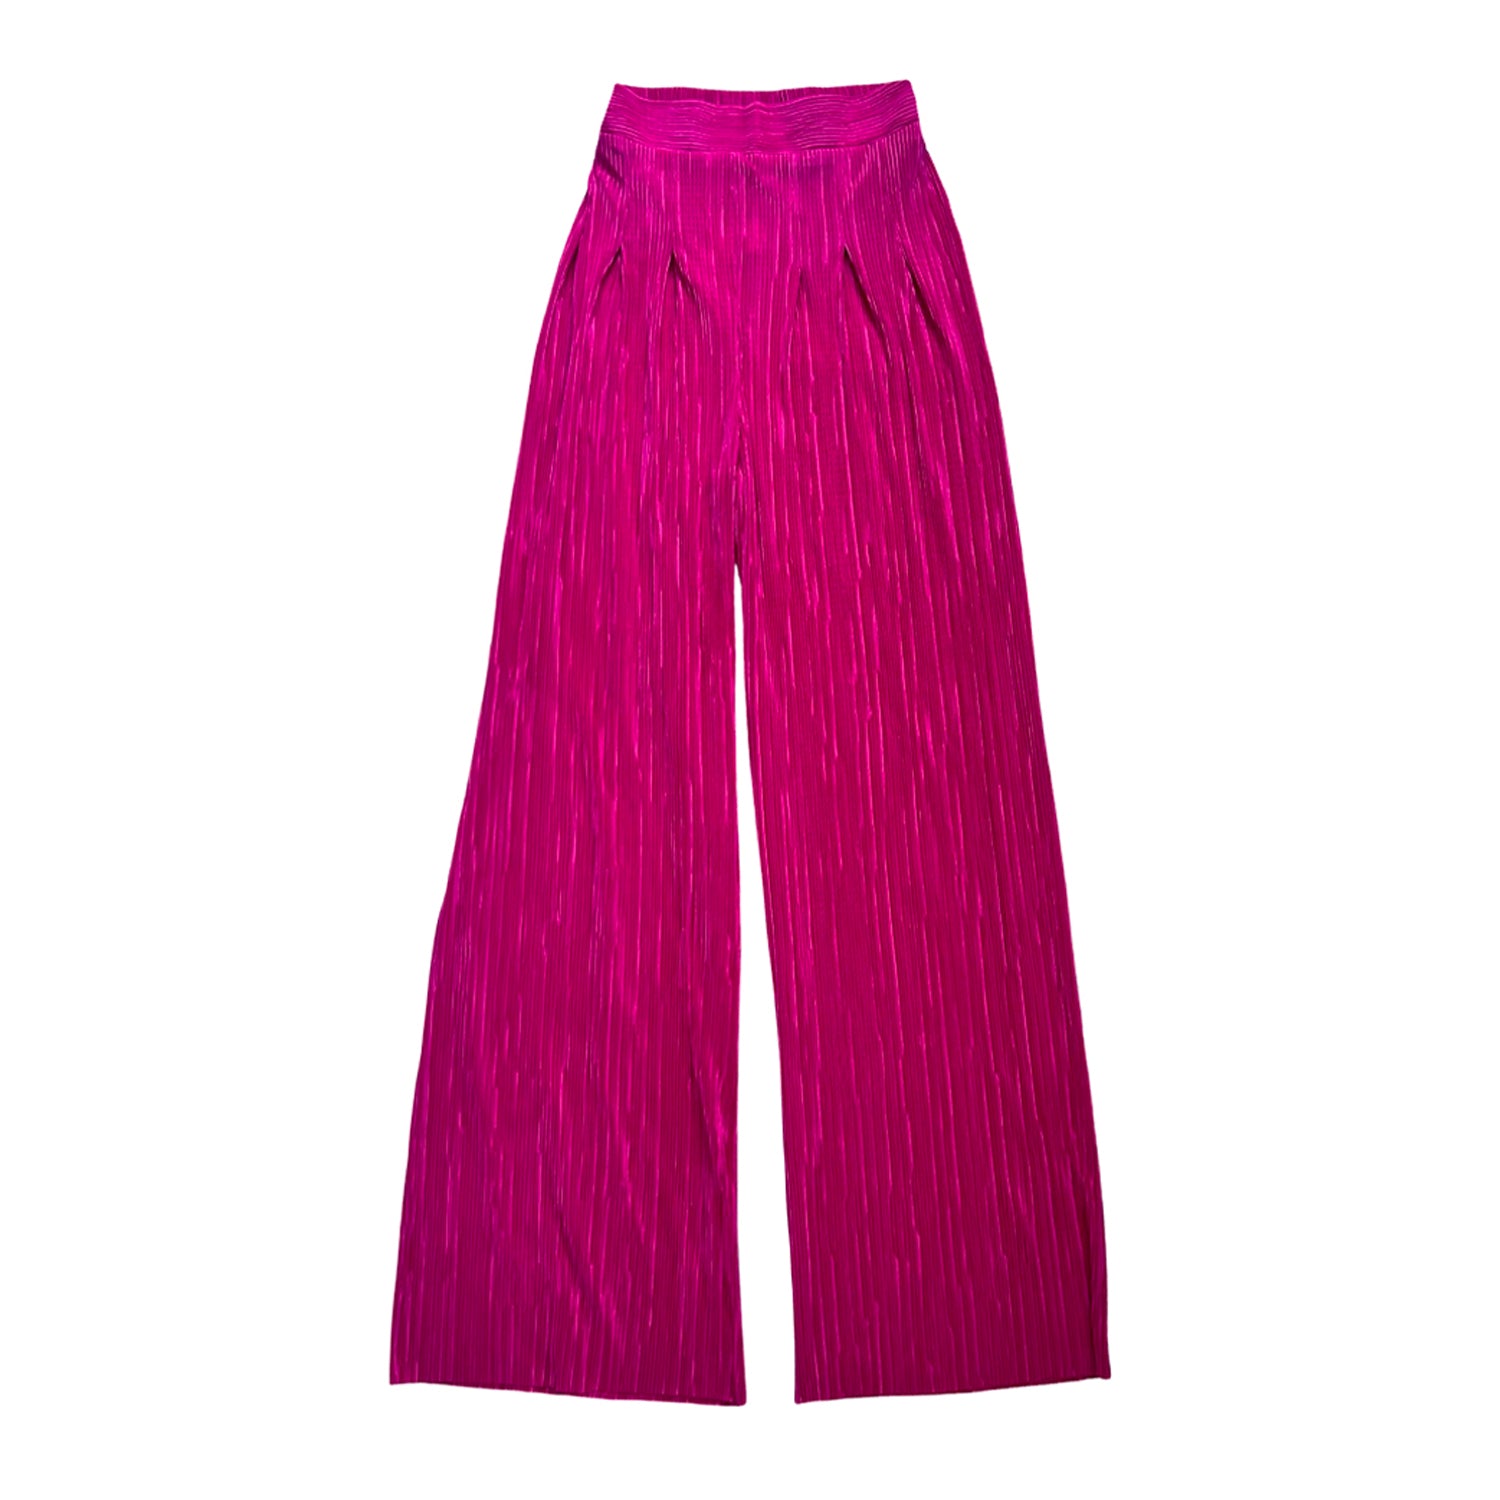 Shirt & Wide-Leg Pants Set in Hot Pink